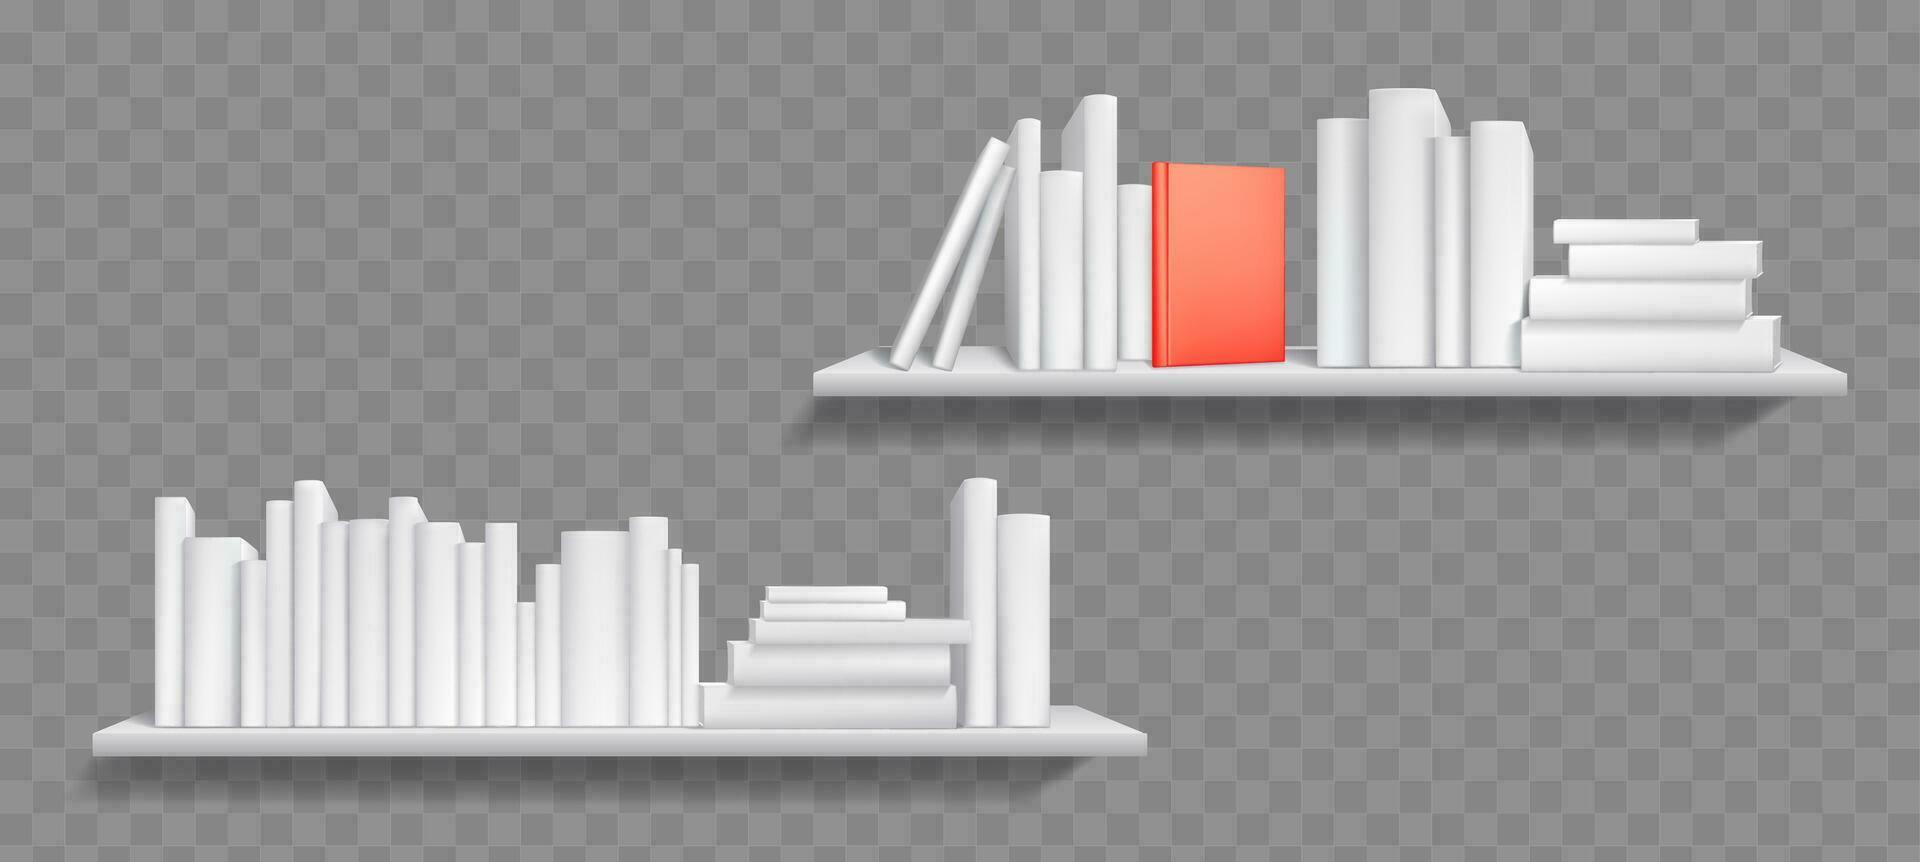 wit blanco 3d boek plank Hoes bibliotheek mockup vector